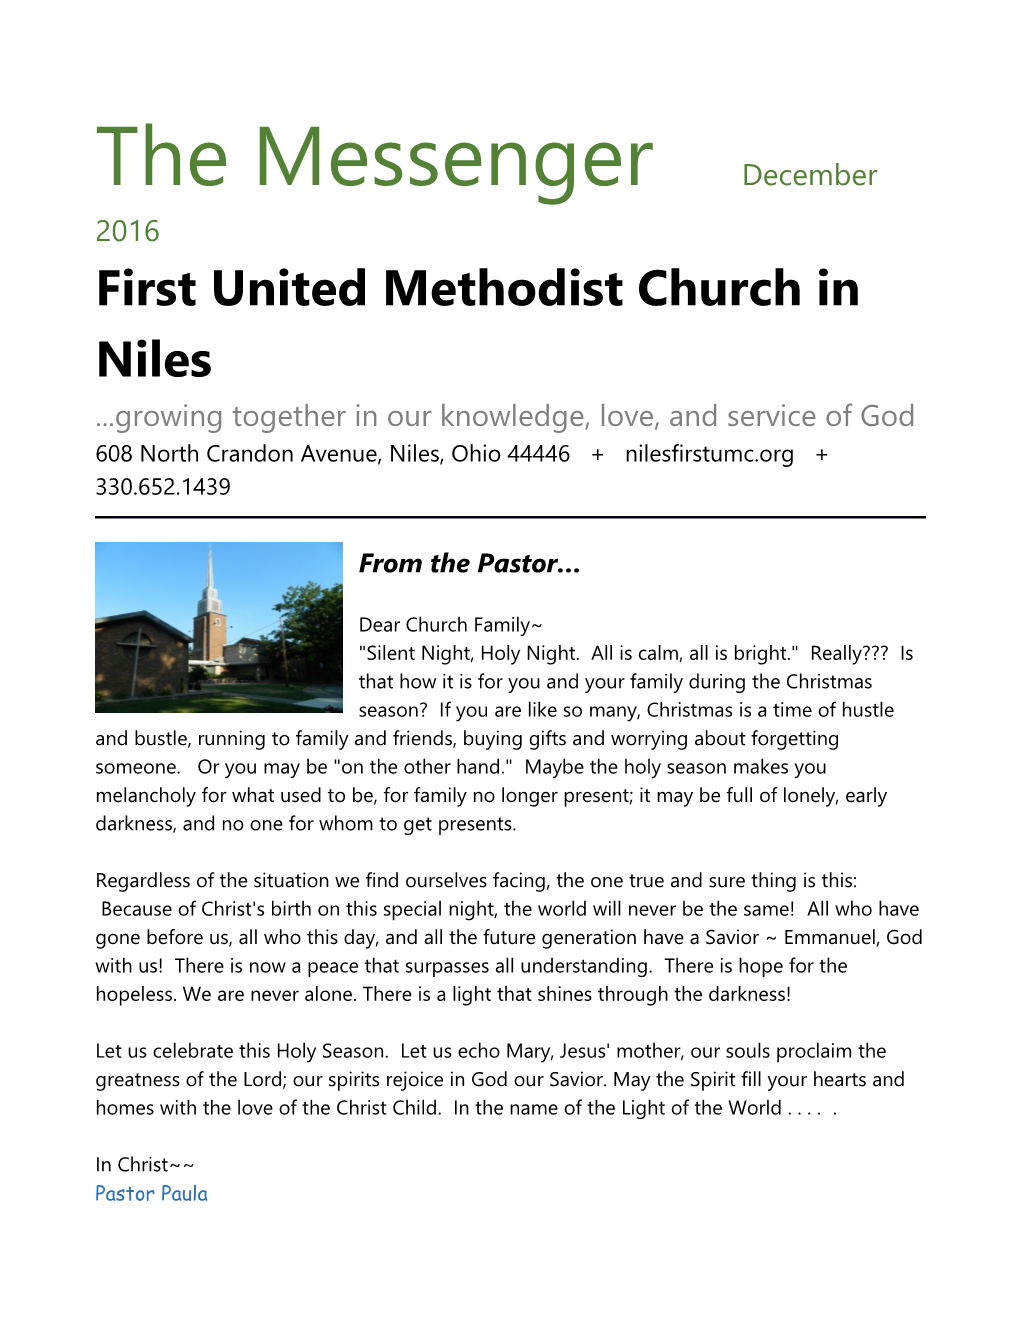 First United Methodist Church in Niles